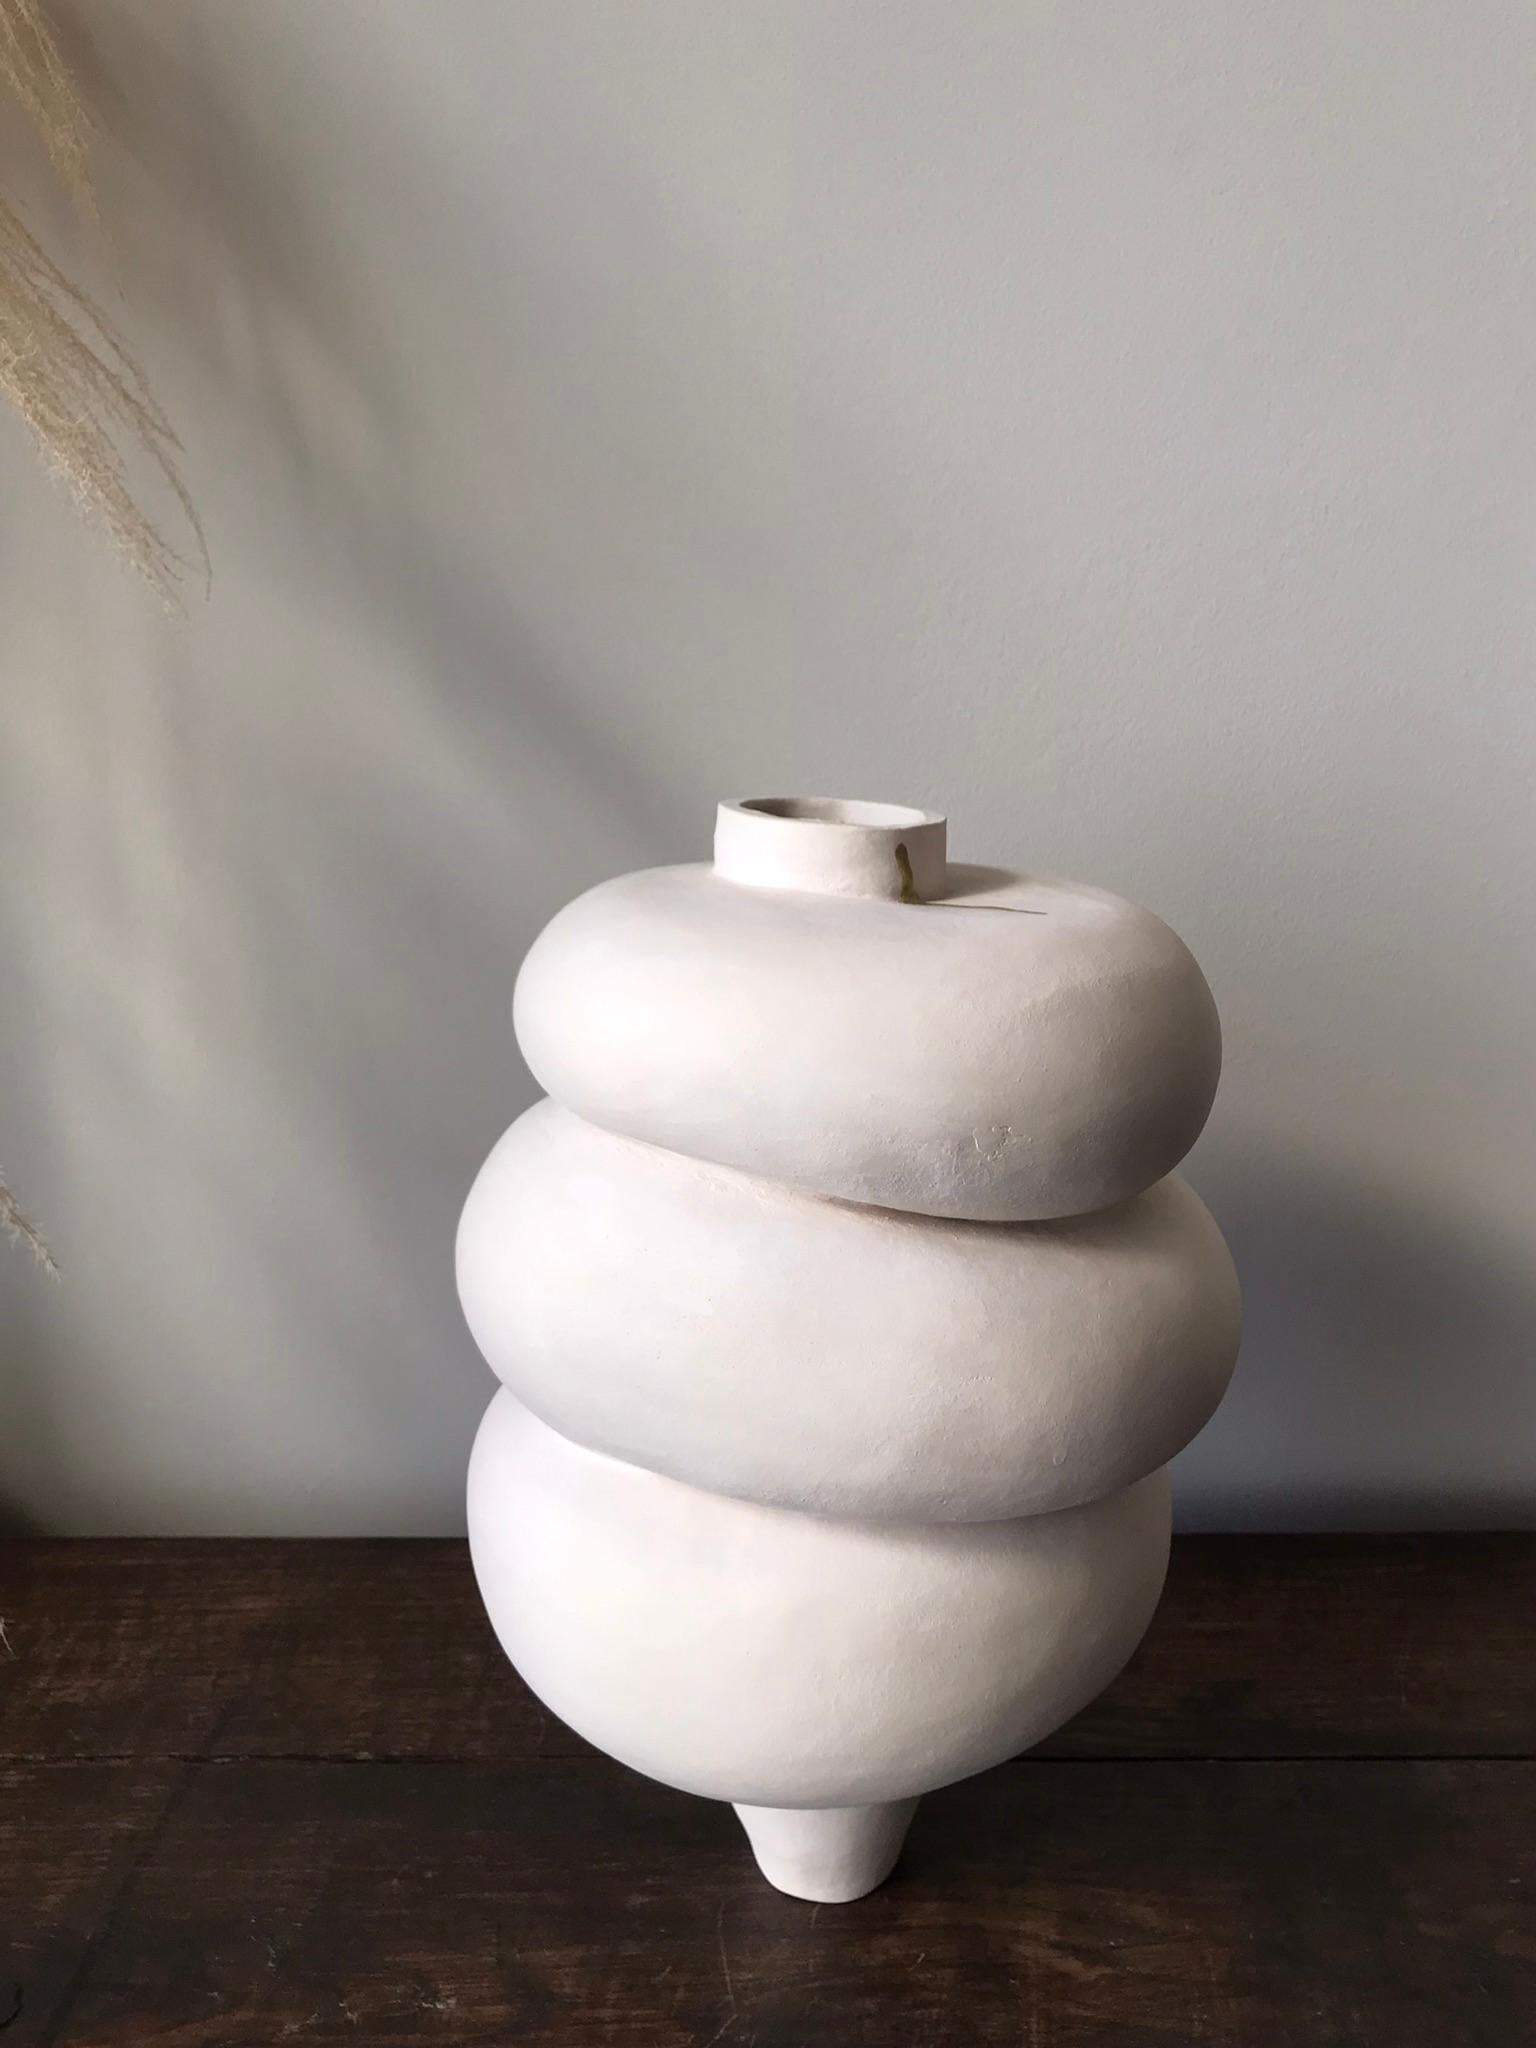 Unglazed Dutch Contemporary Sculptural Ceramic Art Modder Calmness by Françoise Jeffrey For Sale